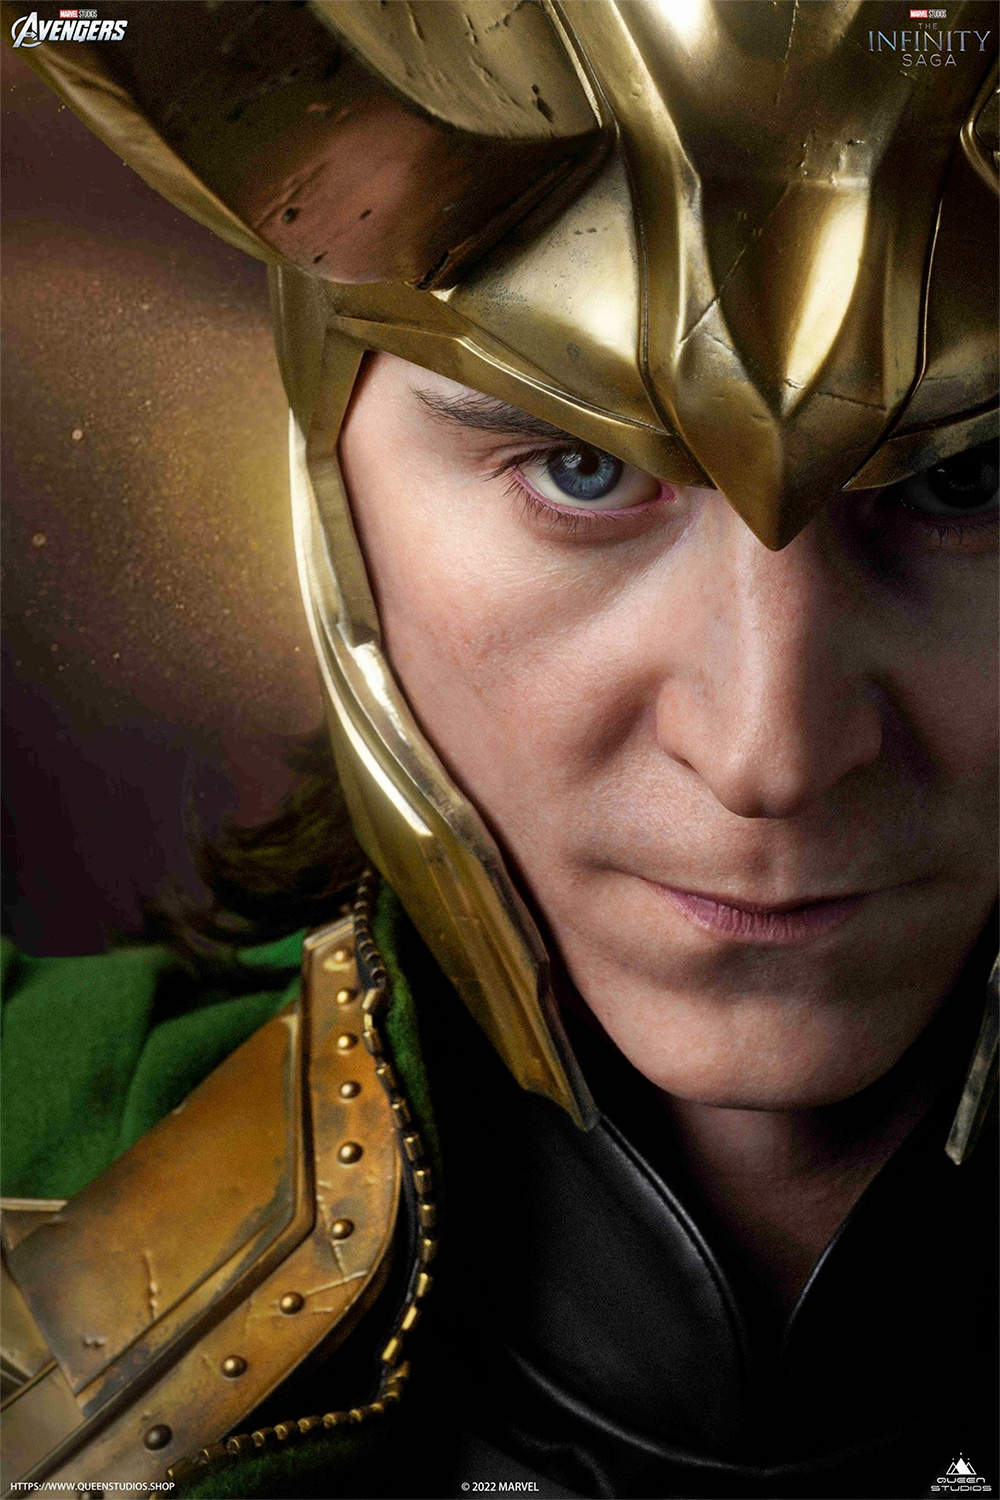 Busto Loki (Tom Hiddleston) em Tamanho Real por 4 Mil Dólares (Queen Studios)